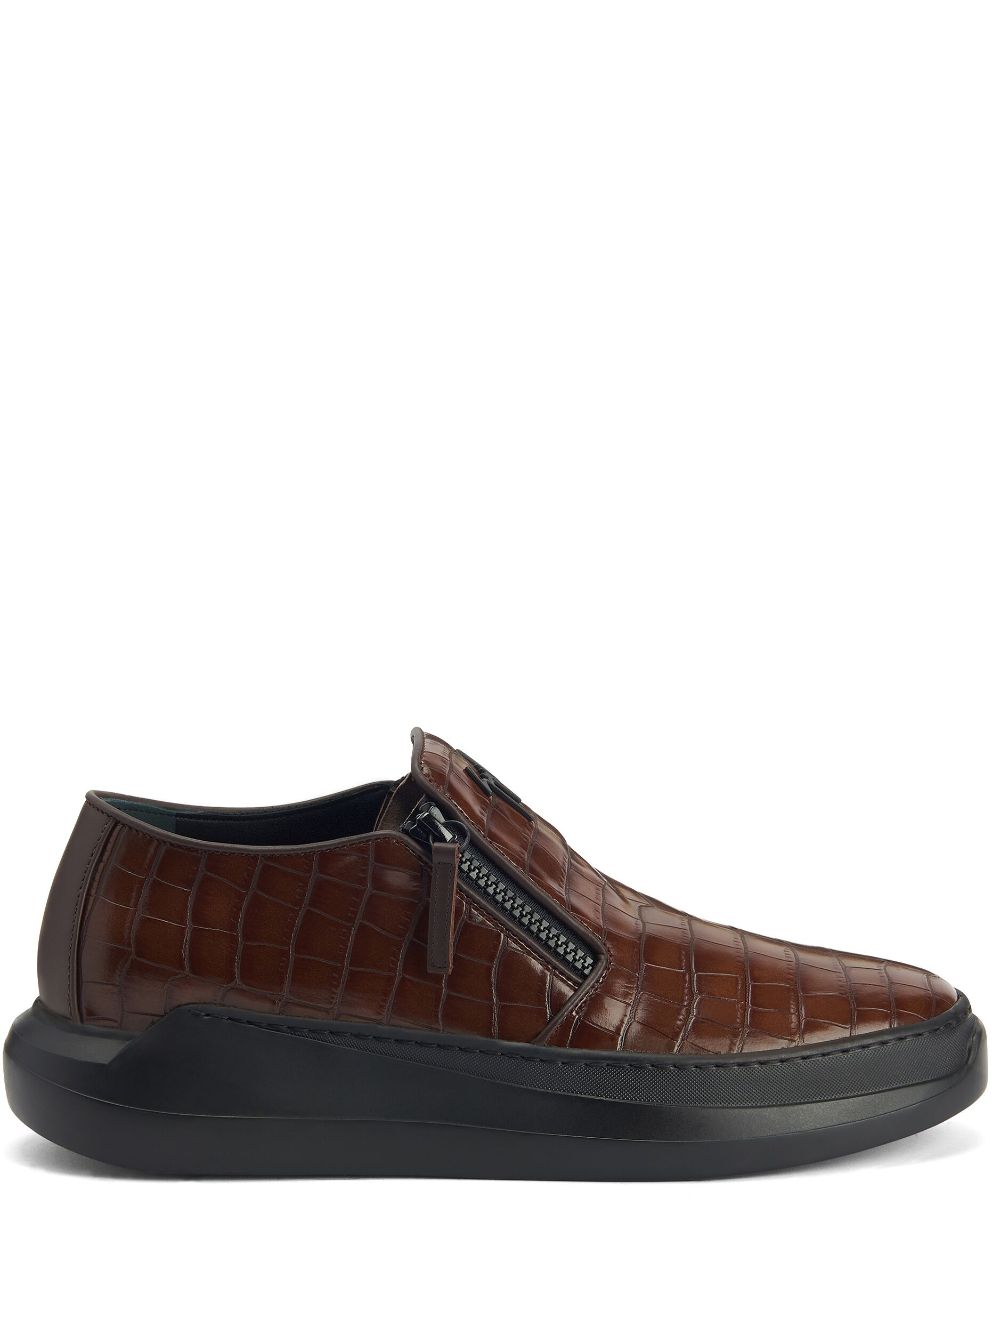 crocodile-effect leather slip-on sneakers